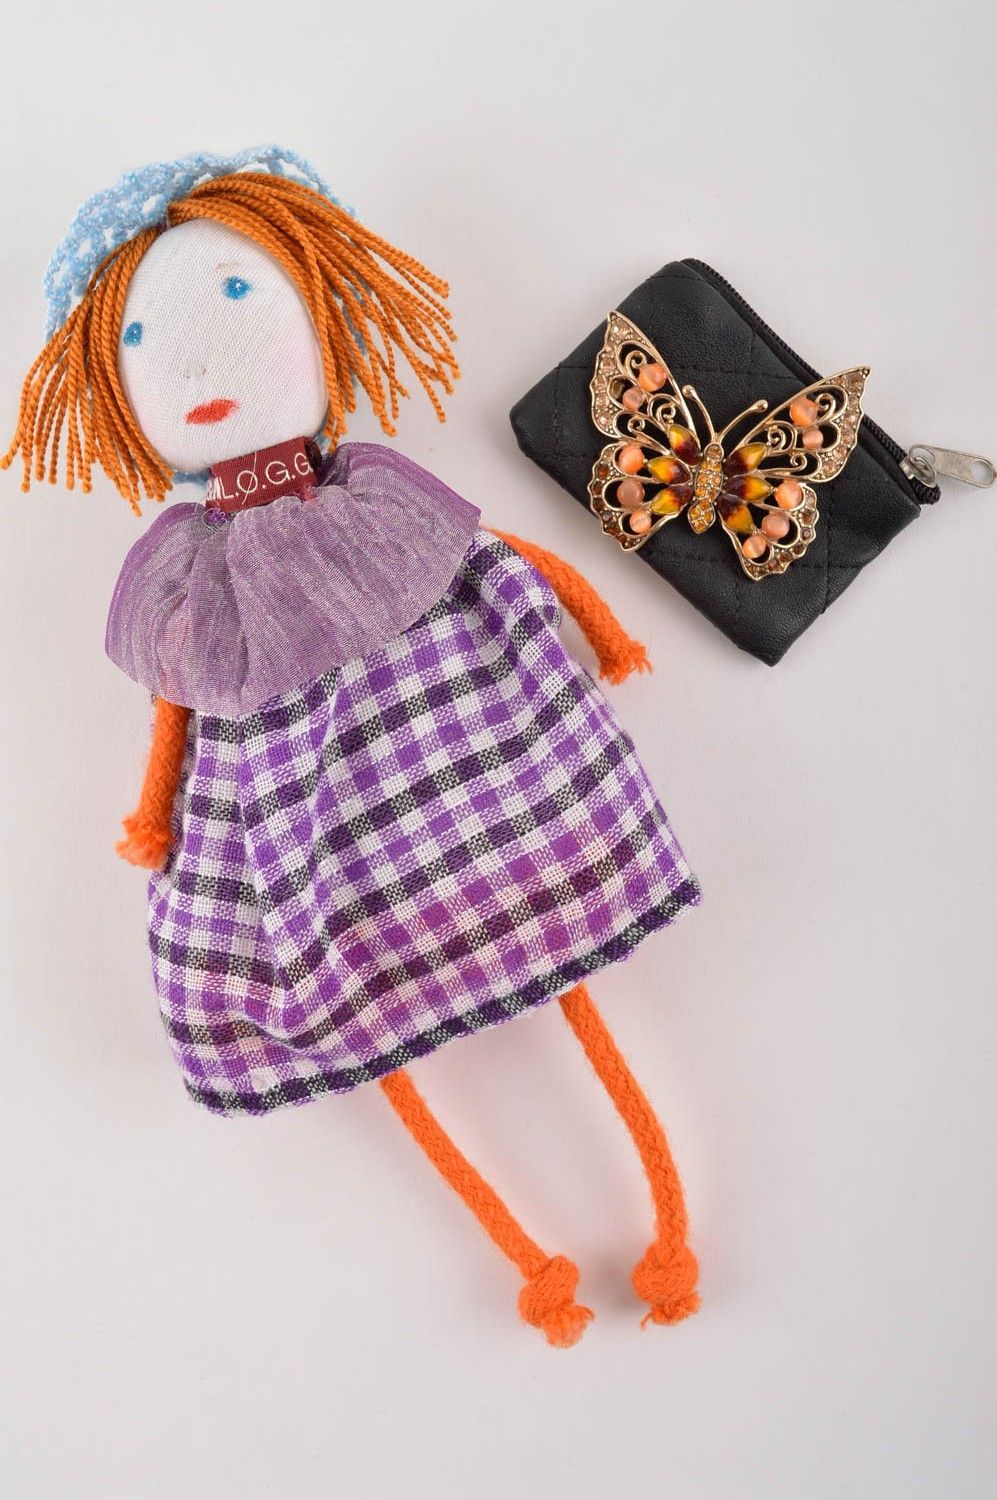 Beautiful handmade rag doll best toys for kids interior design styles gift ideas photo 1